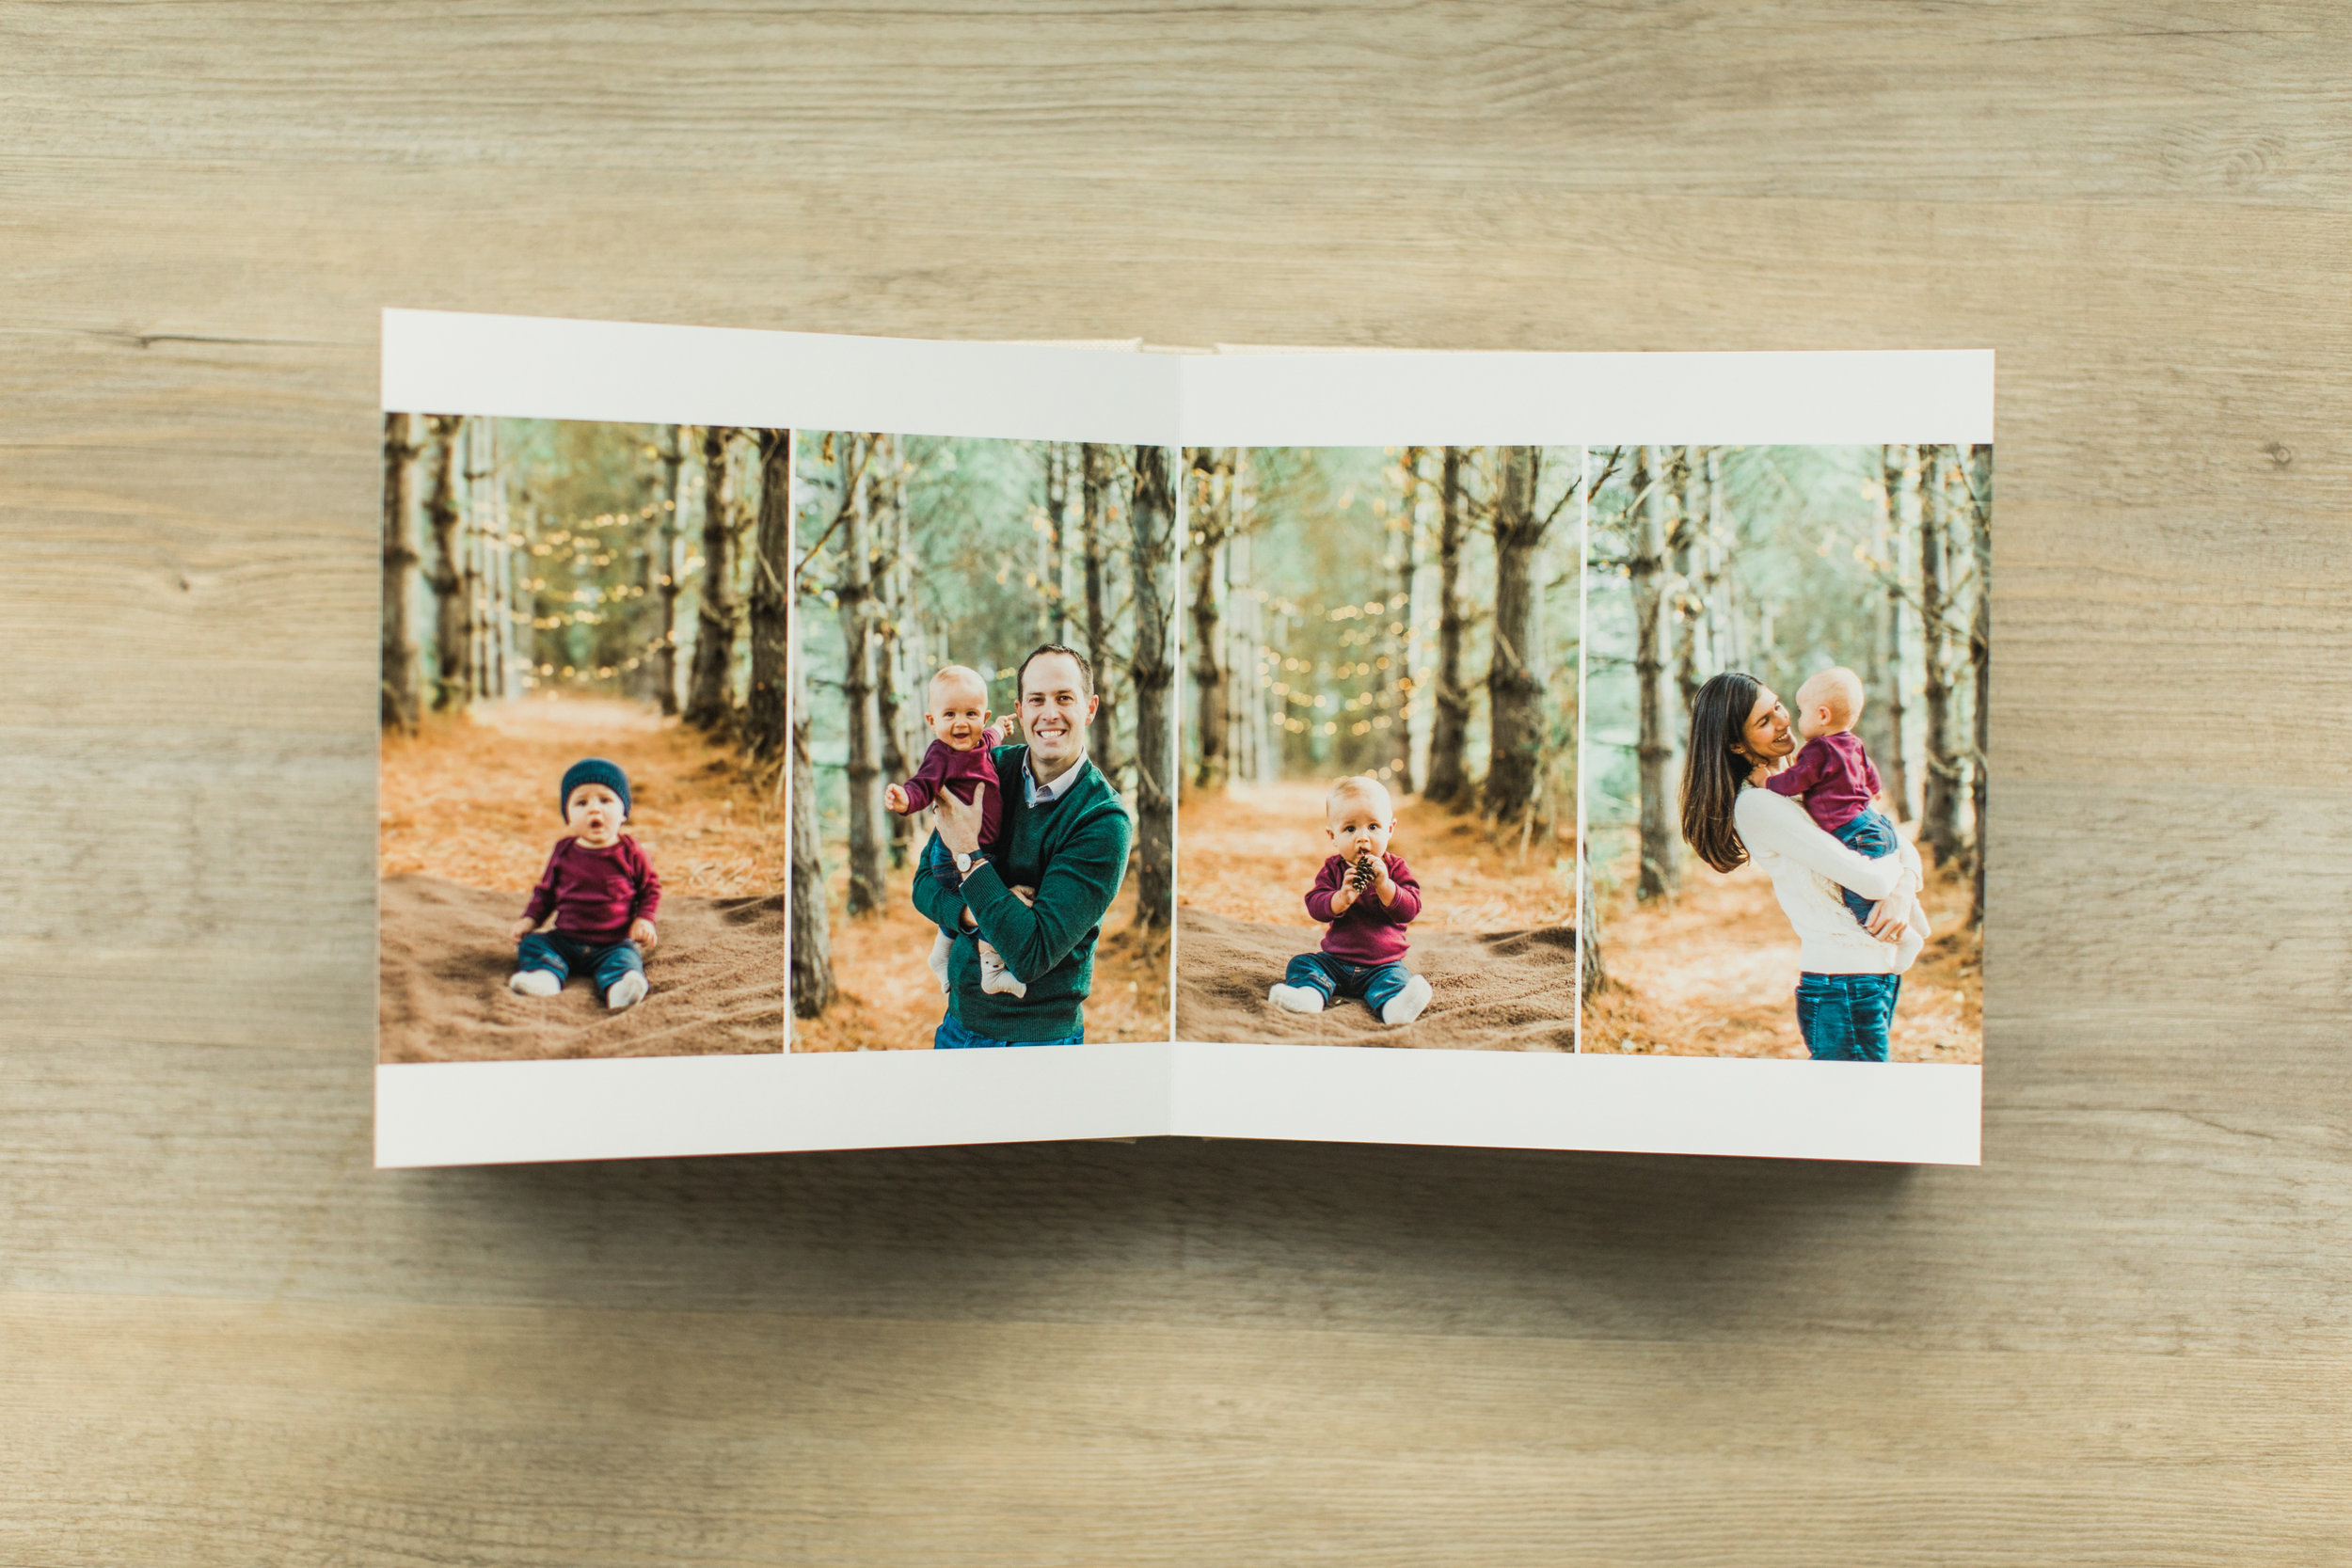 Outdoor photos are shown in a baby photo album. 